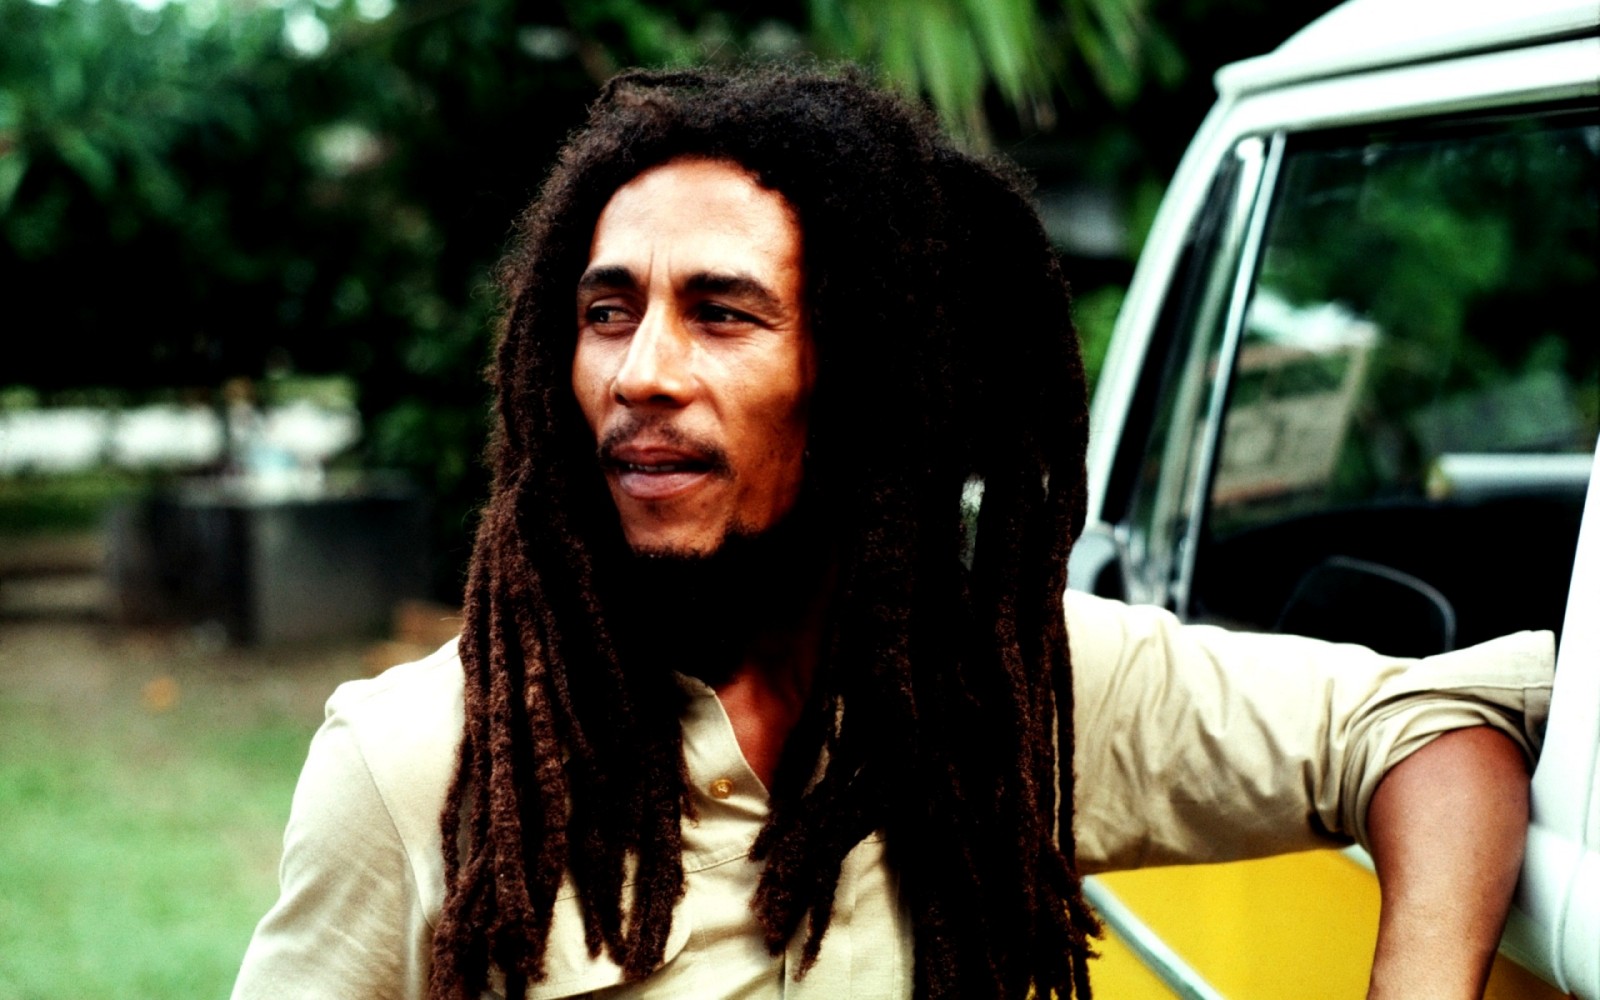 OzgurunalCMD: Bob Marley